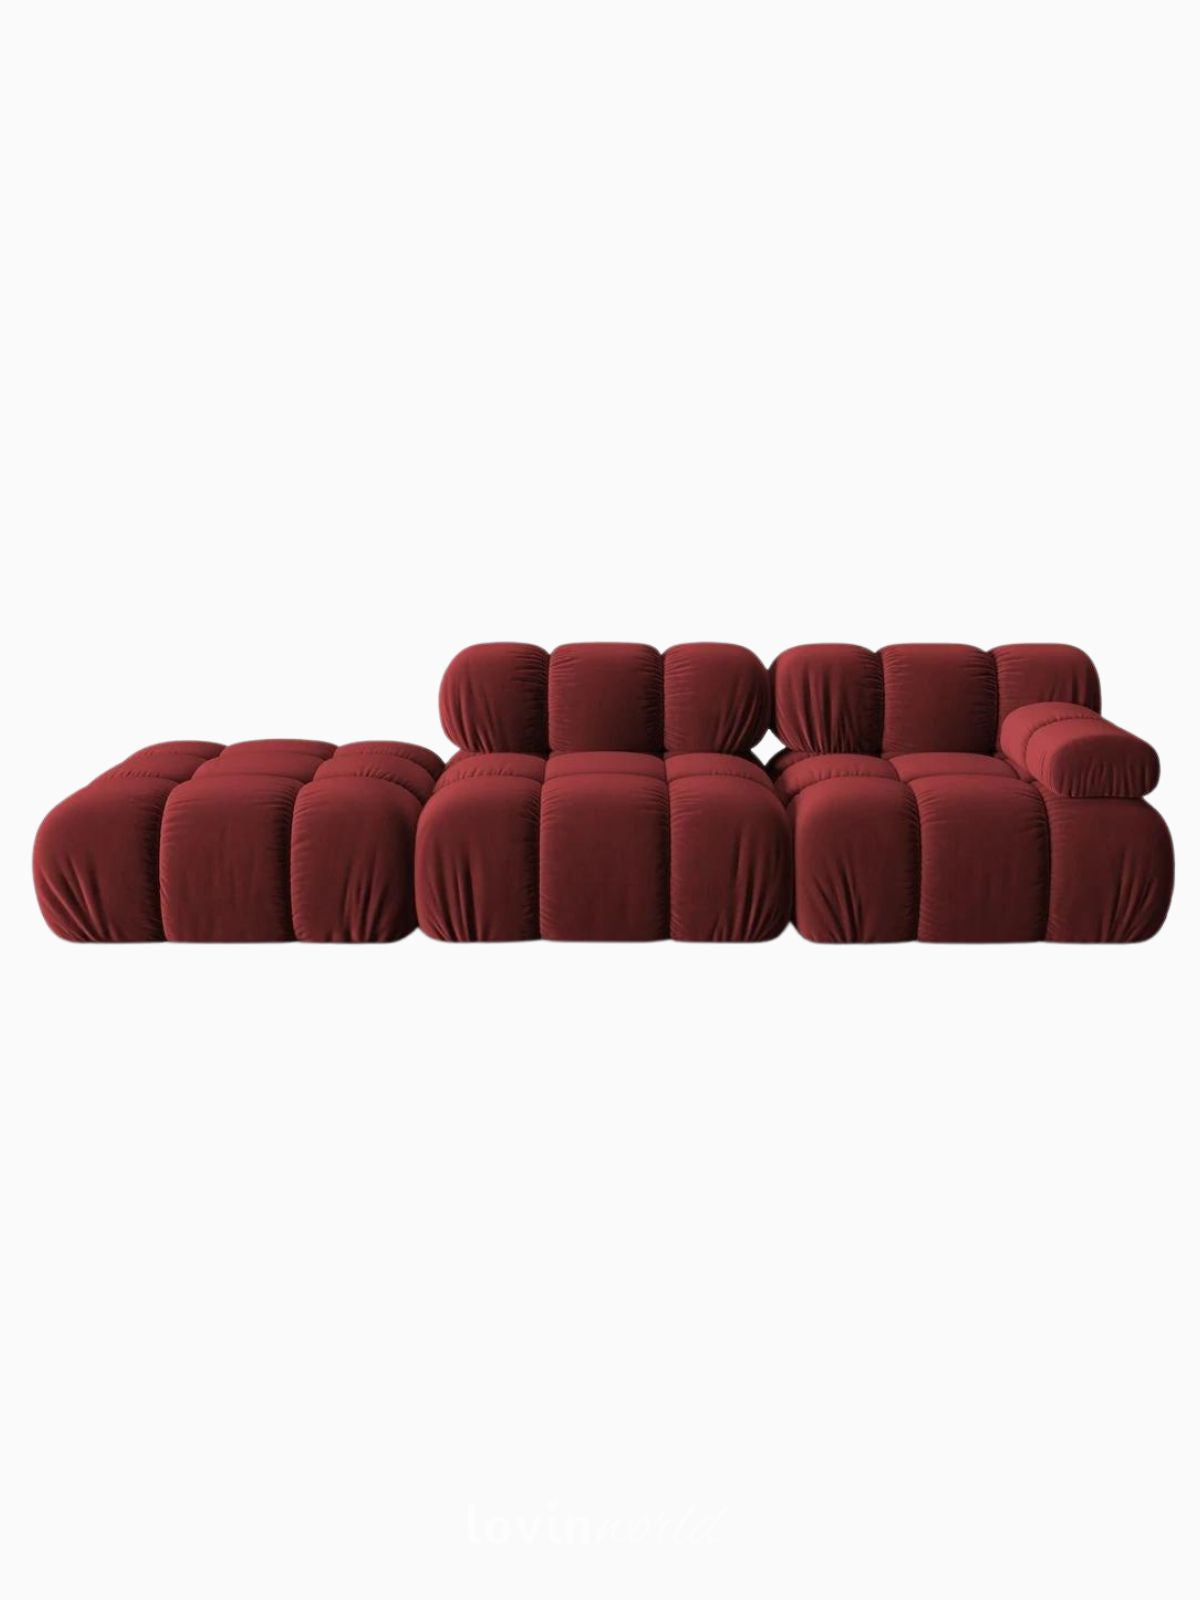 Divano modulare 4 sedute Bellis in velluto, colore rosso-1